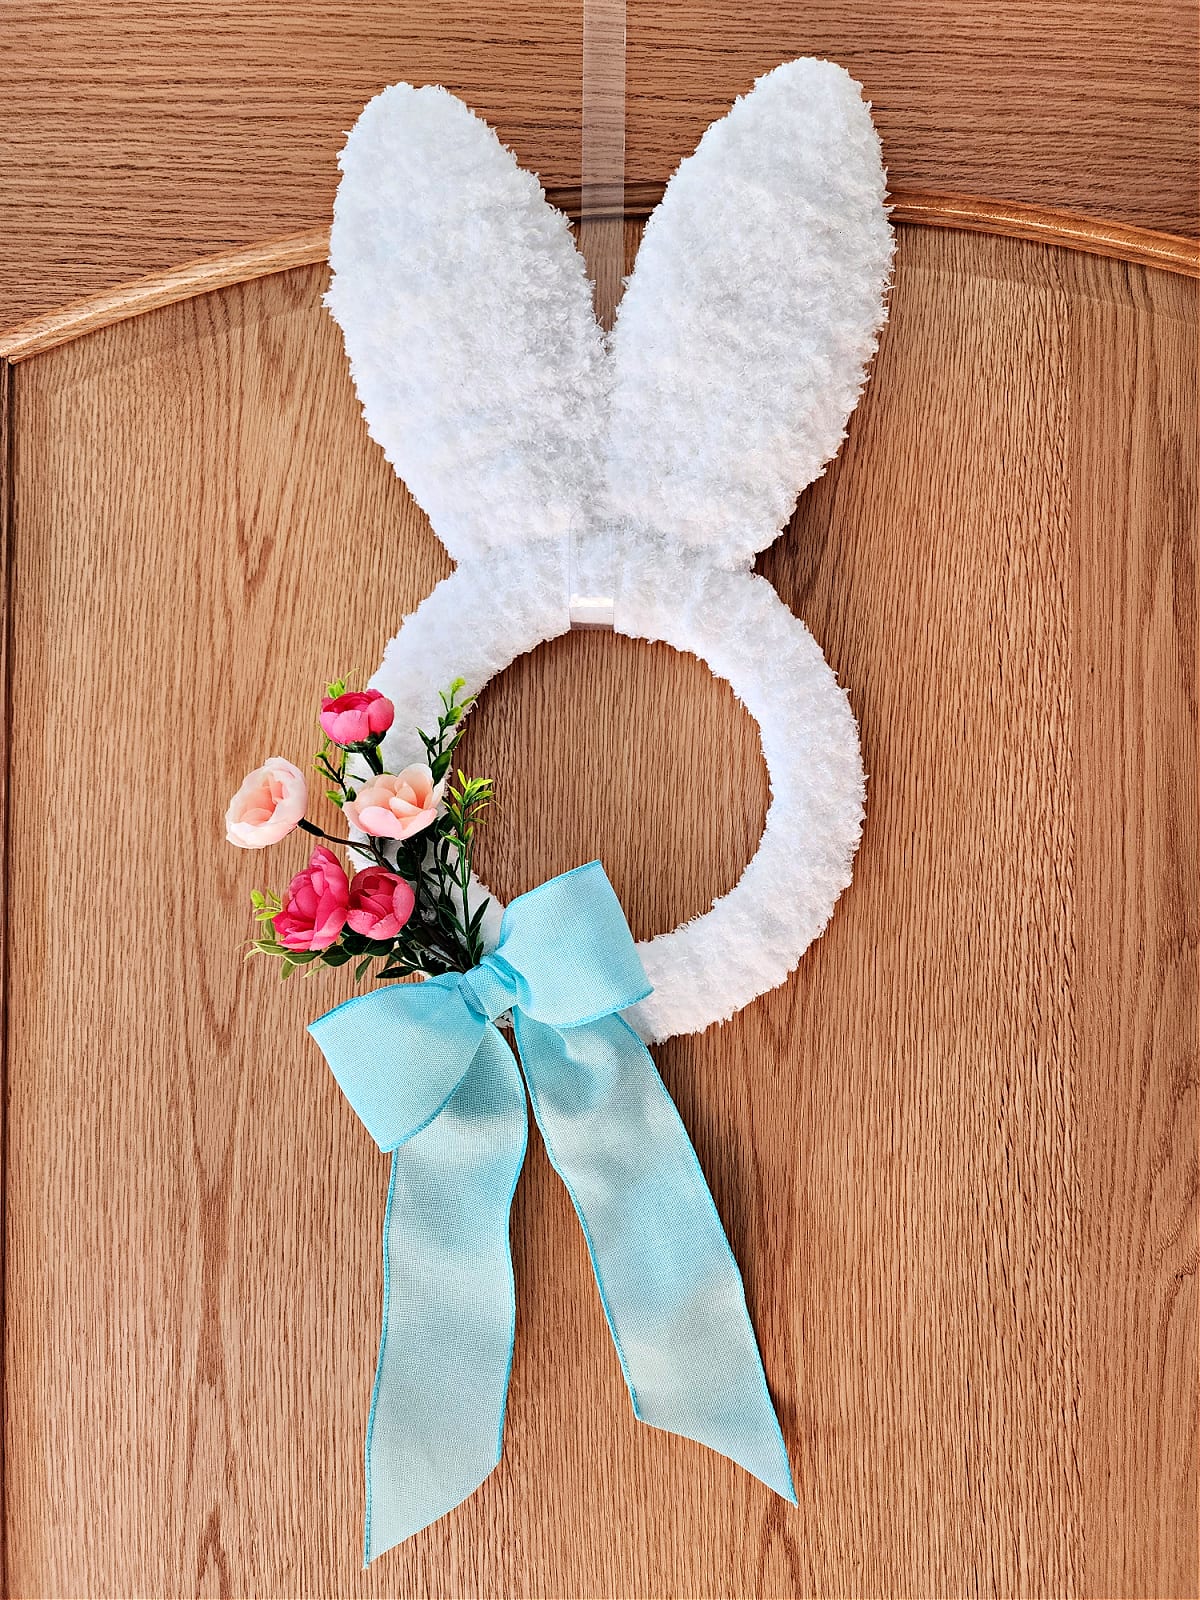 Bunny wreath made with Dollar Tree bunny wreath form.